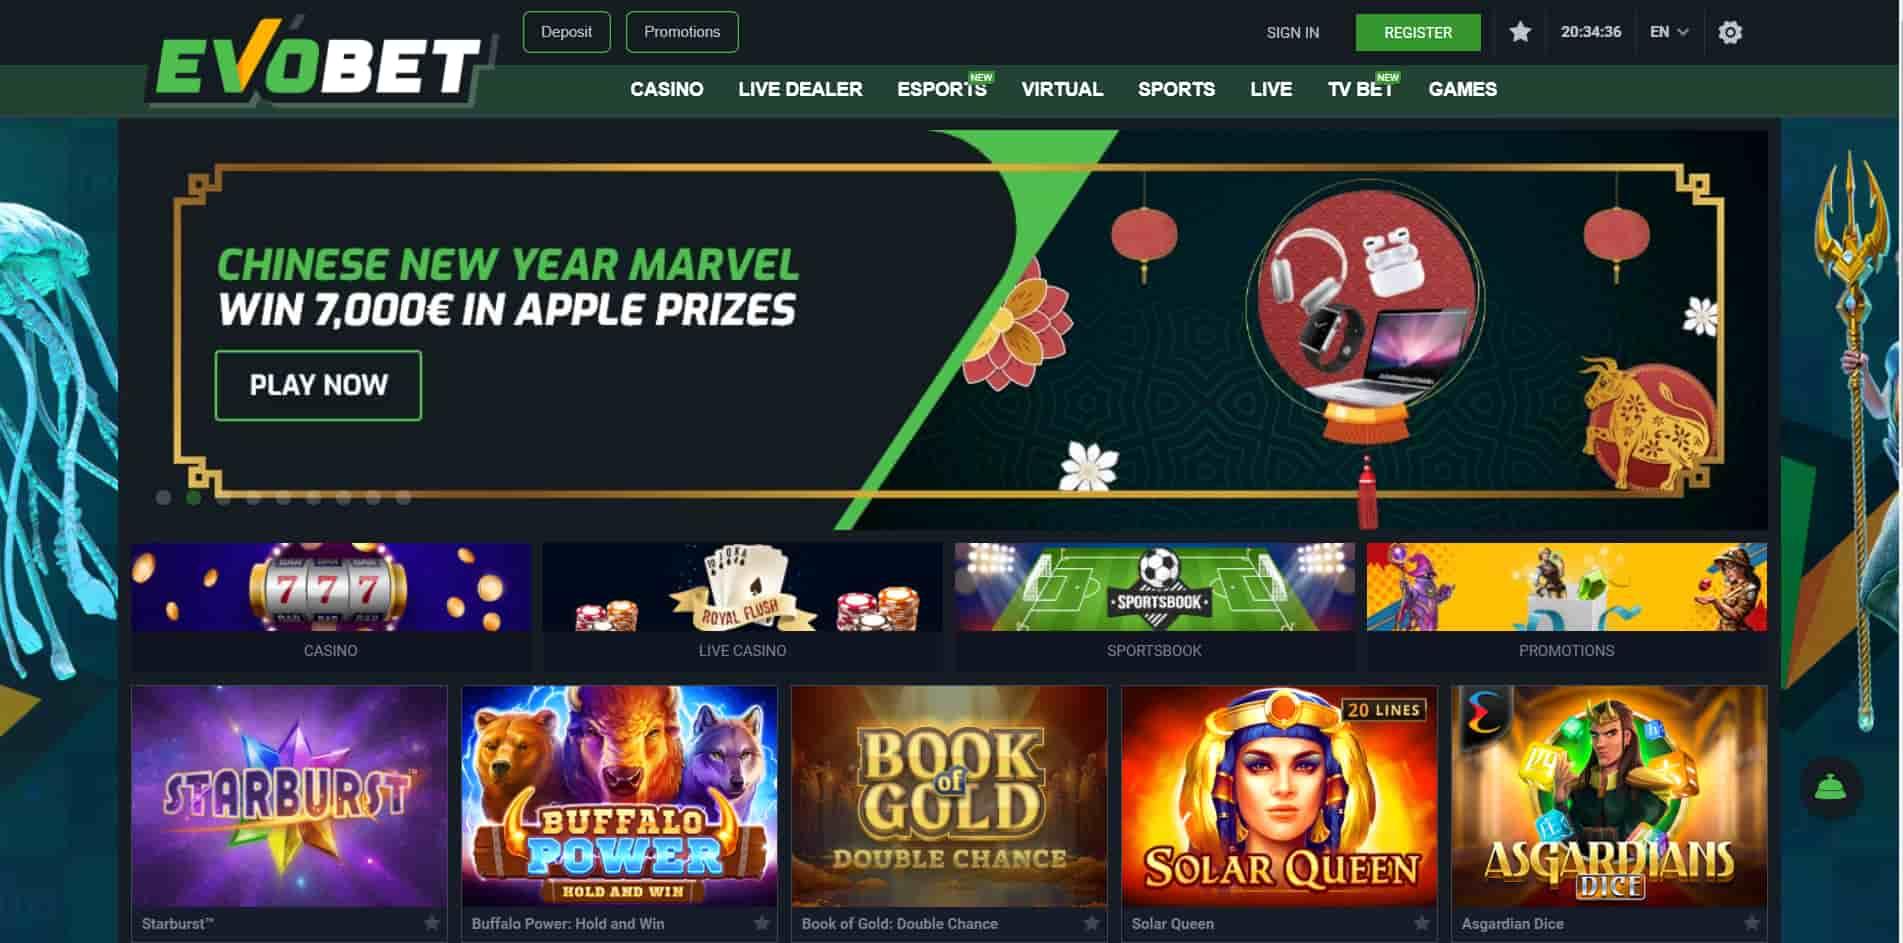 Evobet casino homepage